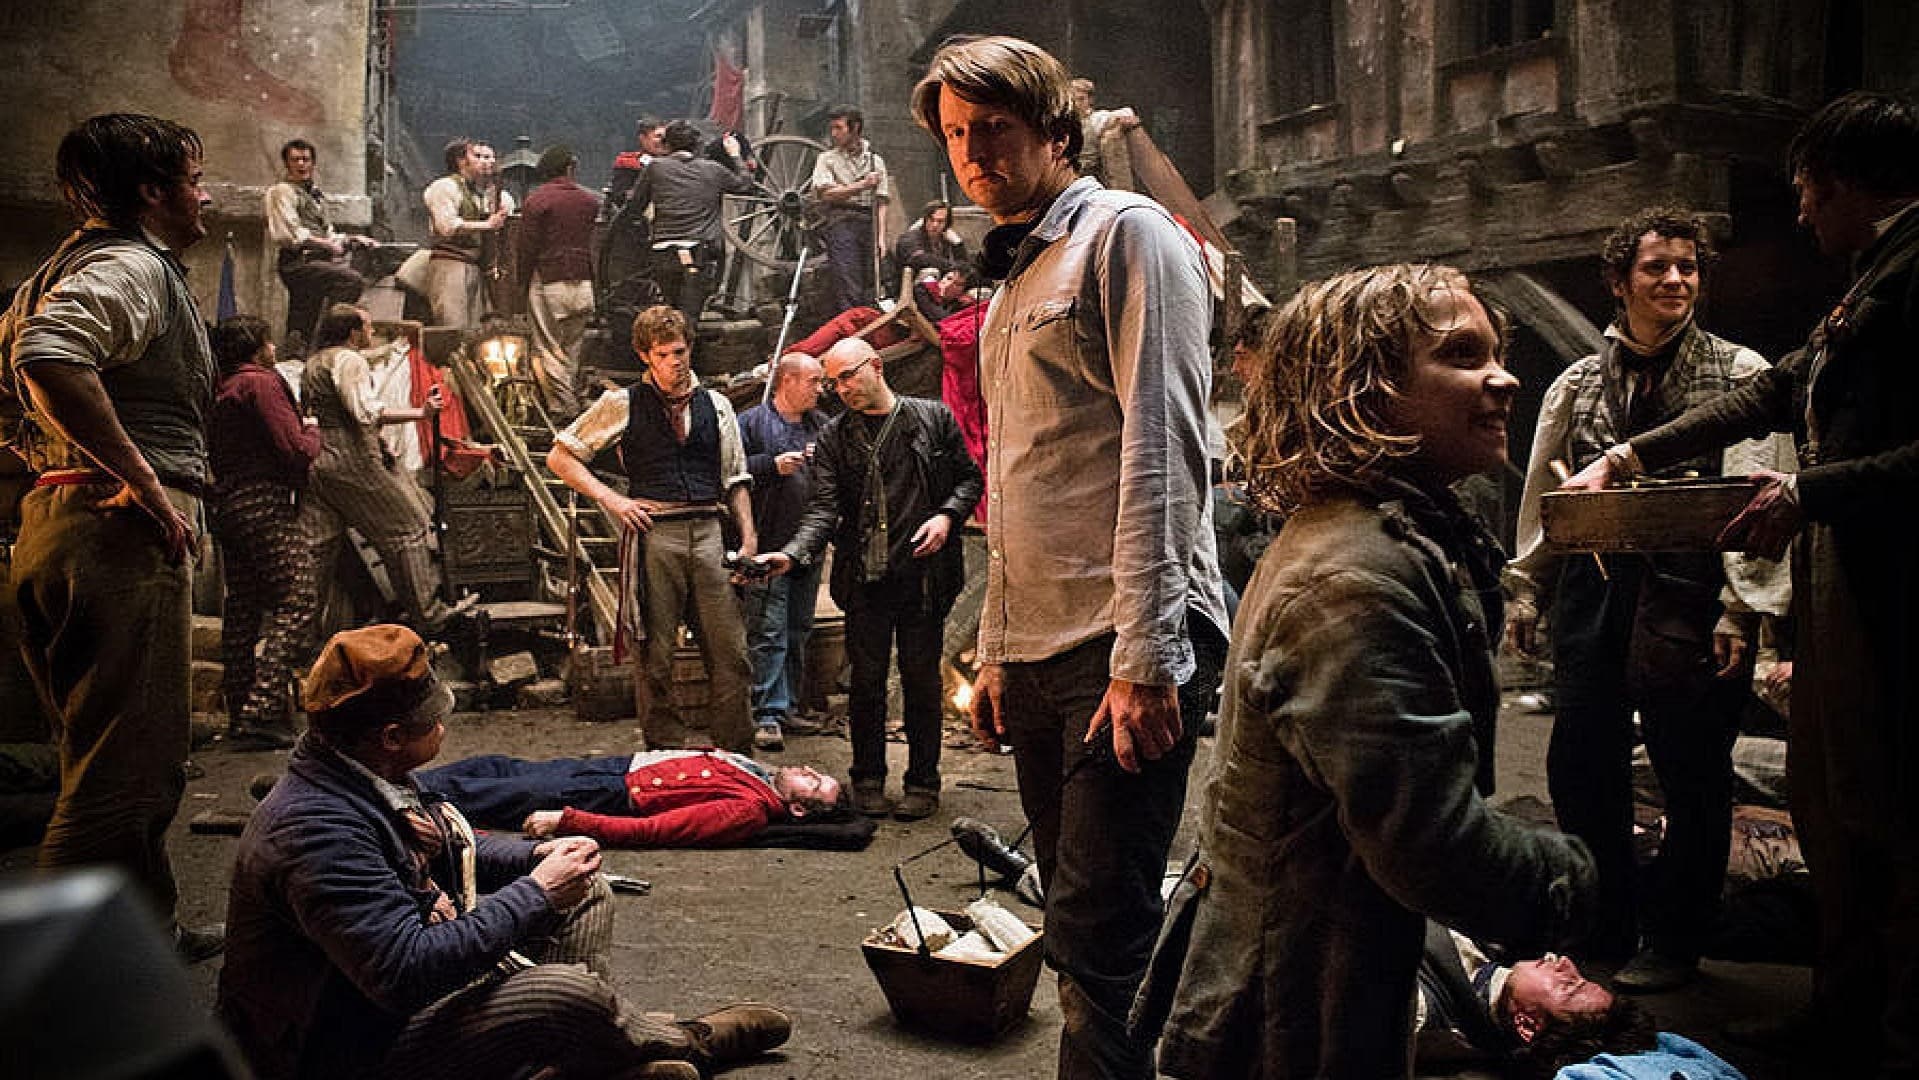 Image du film Les Misérables cgshnh5jnuc3idgzr70b0q1g4pujpg